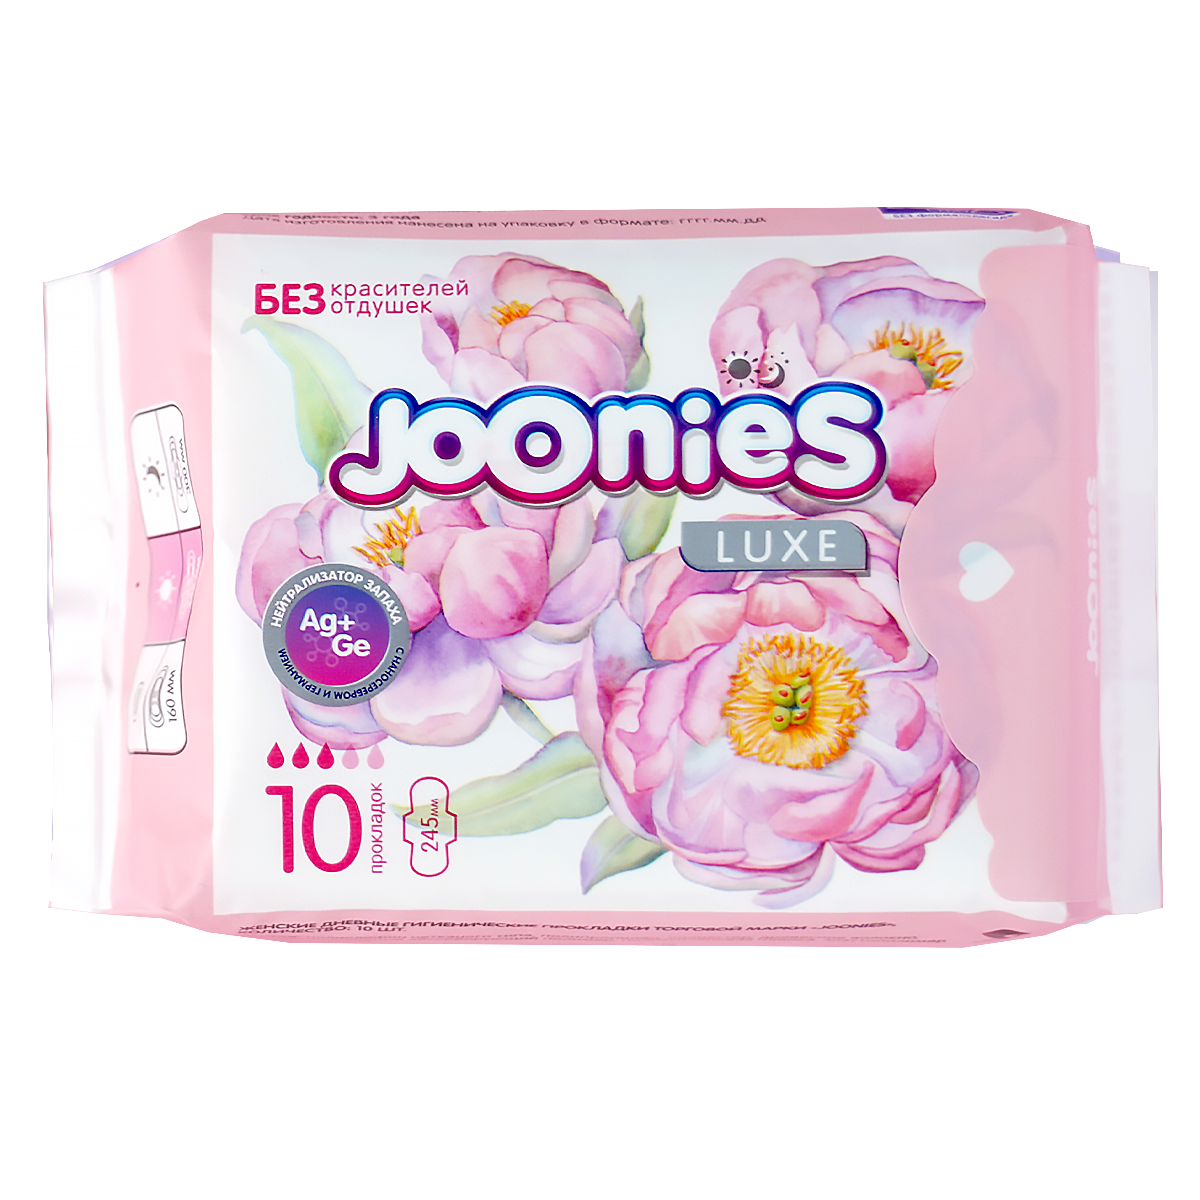 Прокладки Joonies Luxe дневные 10шт - фото 1